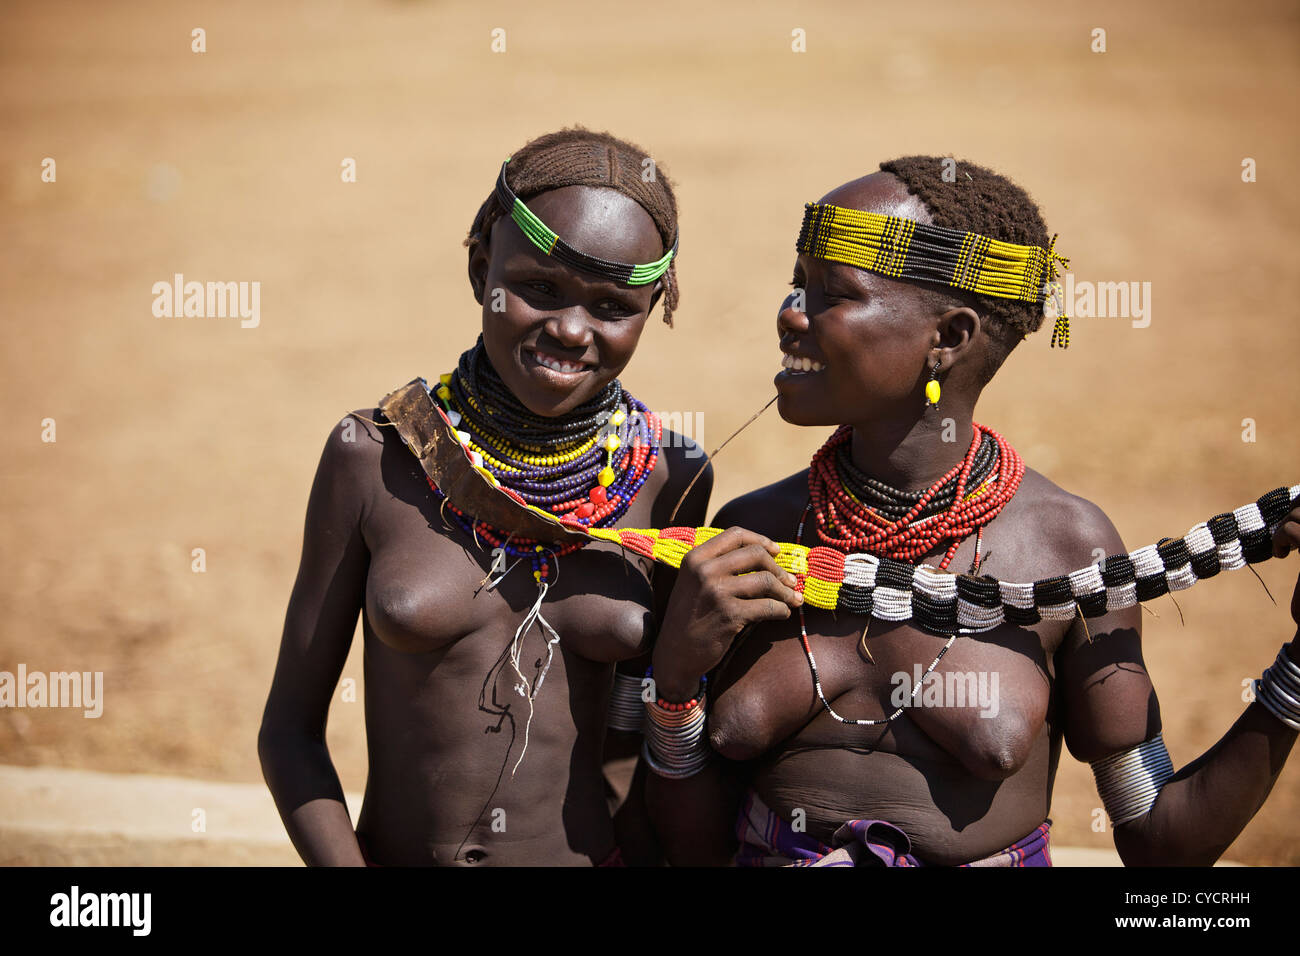 Les filles des tribus ayant un peu d'amusement. Banque D'Images